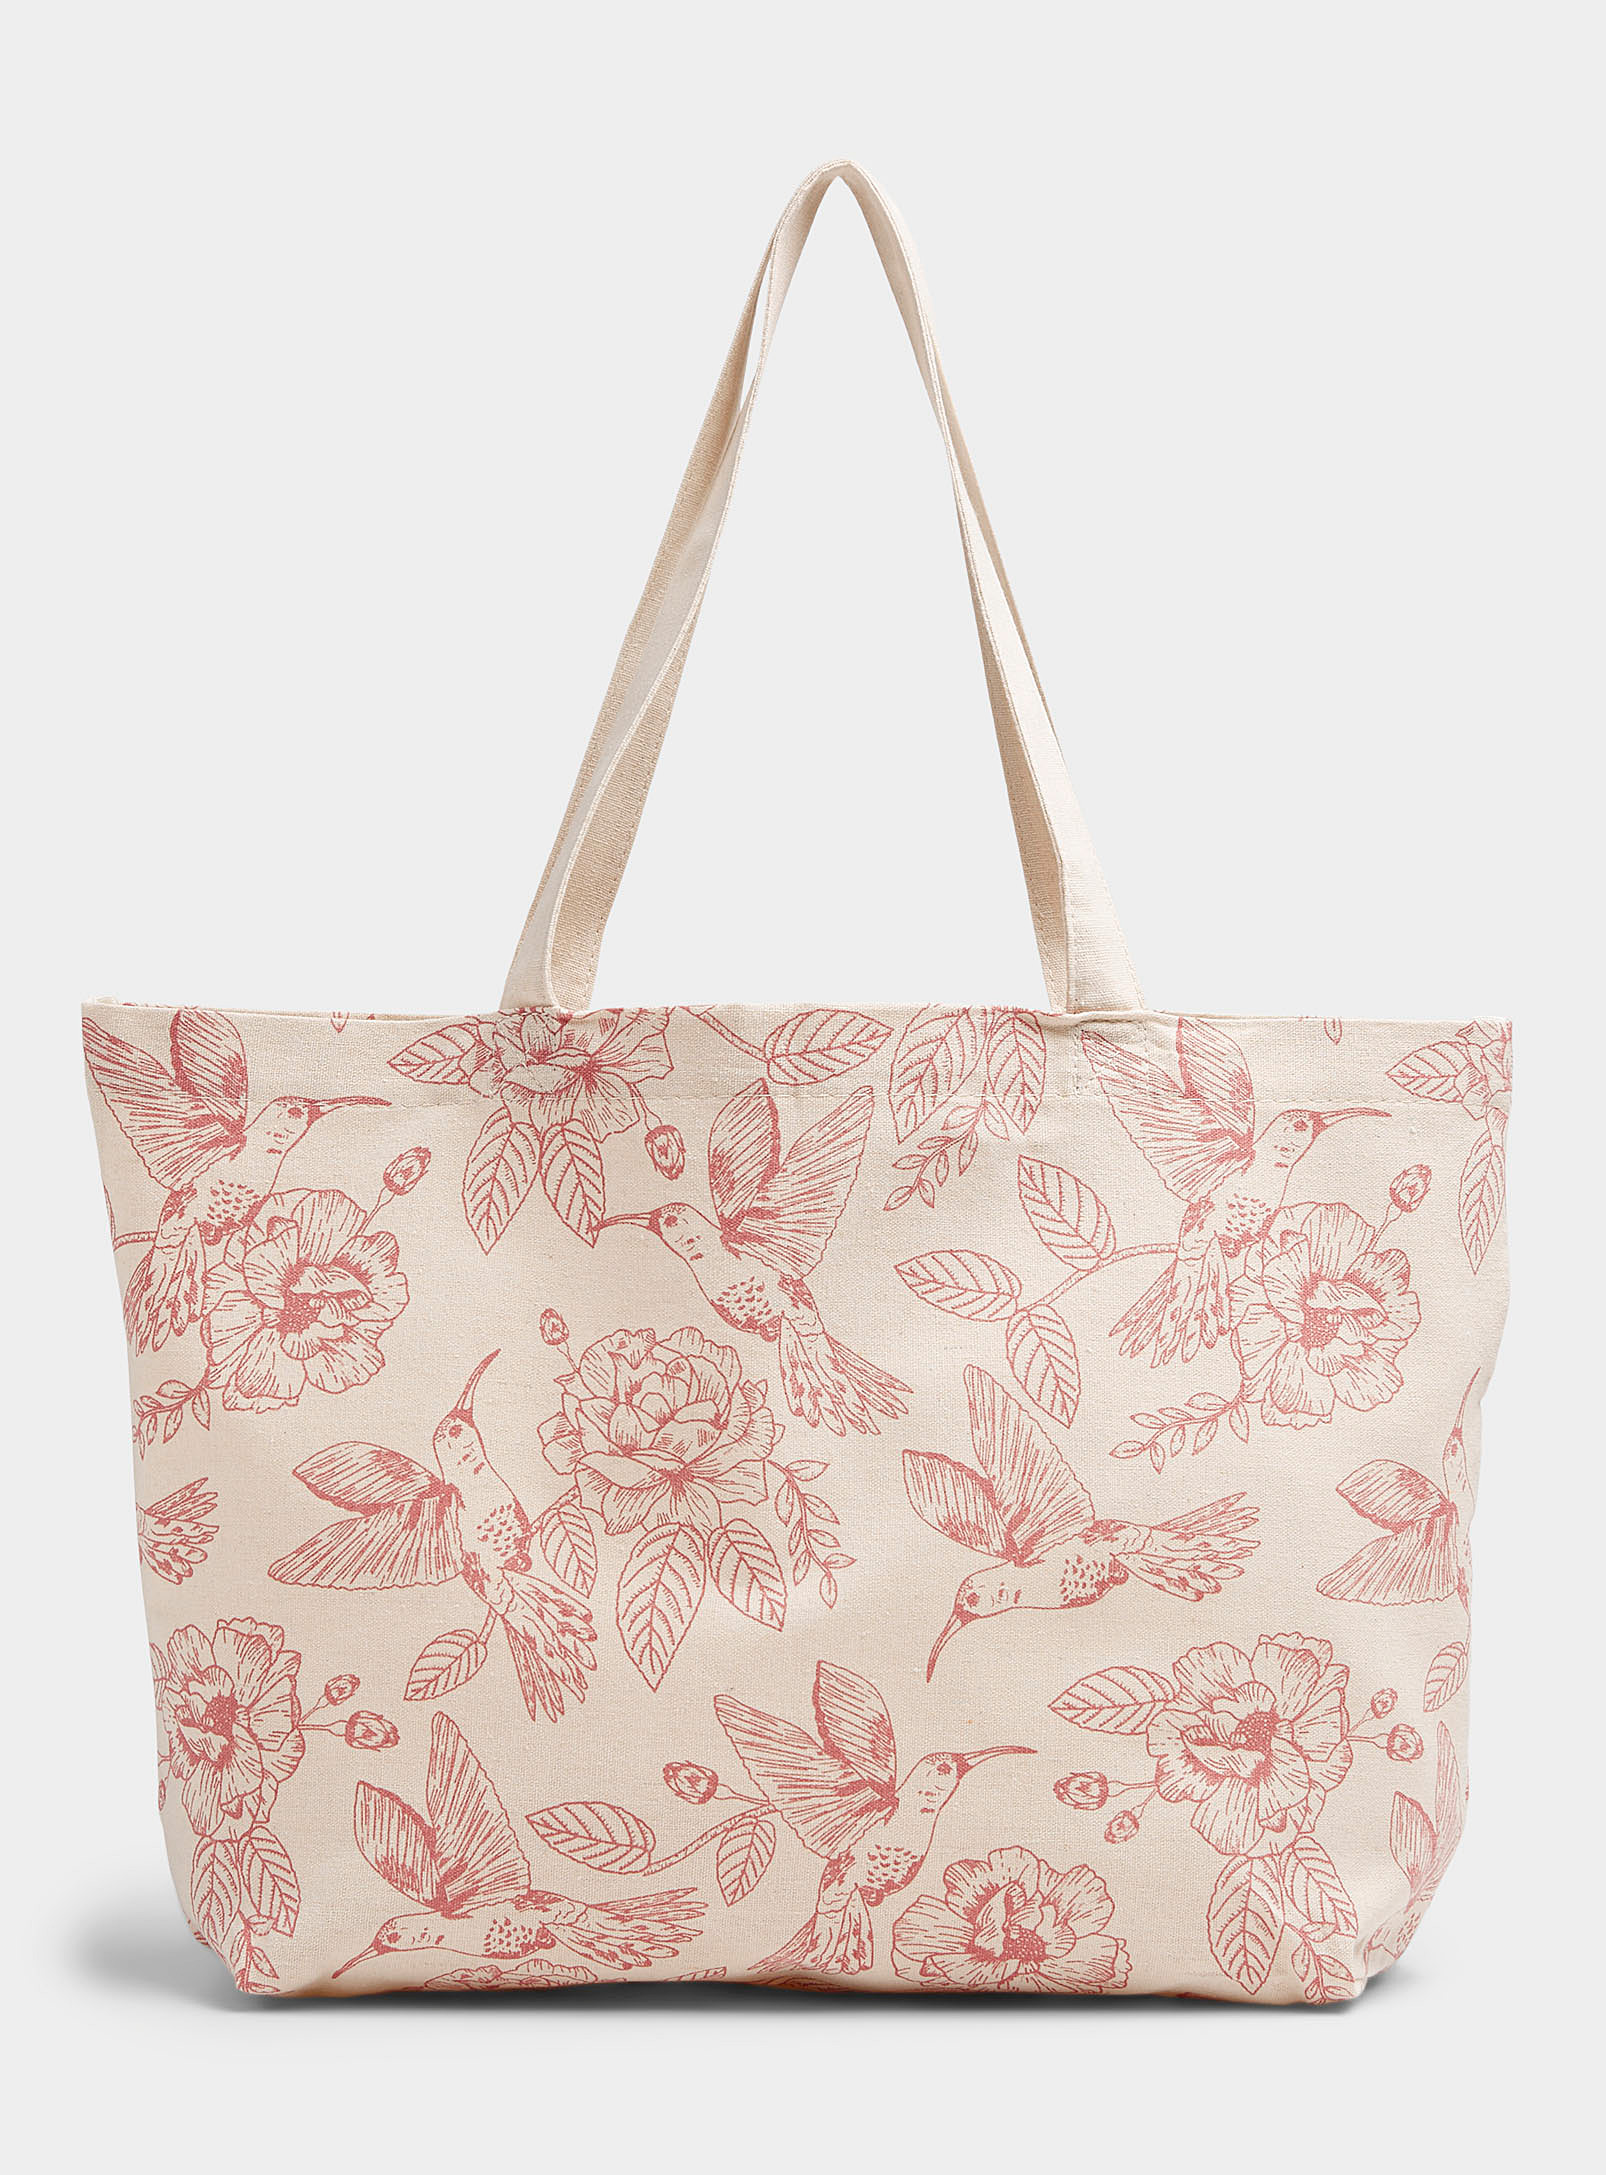 Simons - Women's Flower and hummingbird Tote Bag